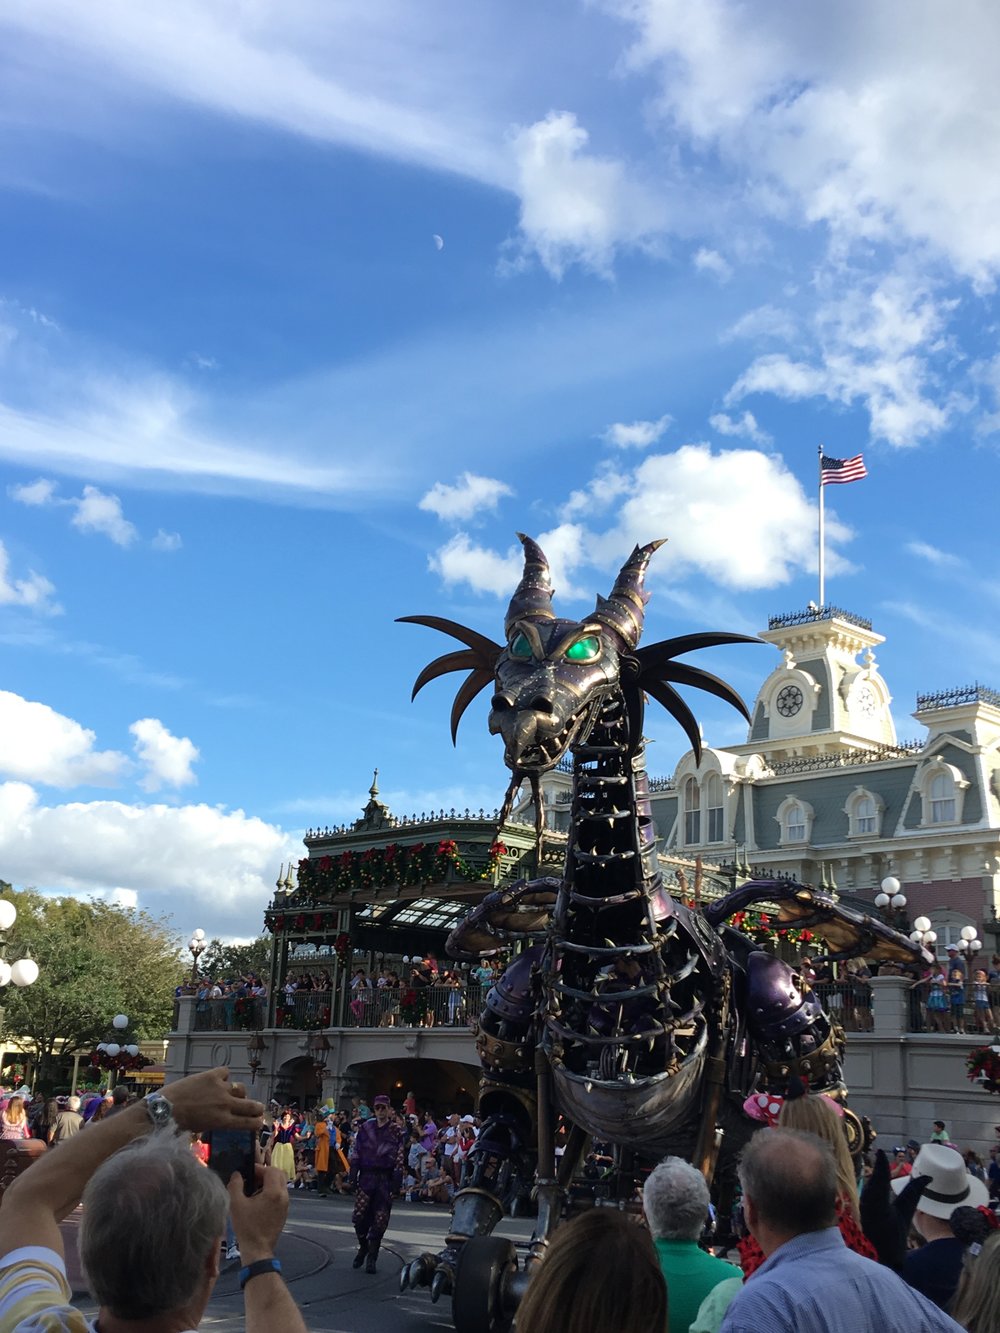 Magic Kingdom parade